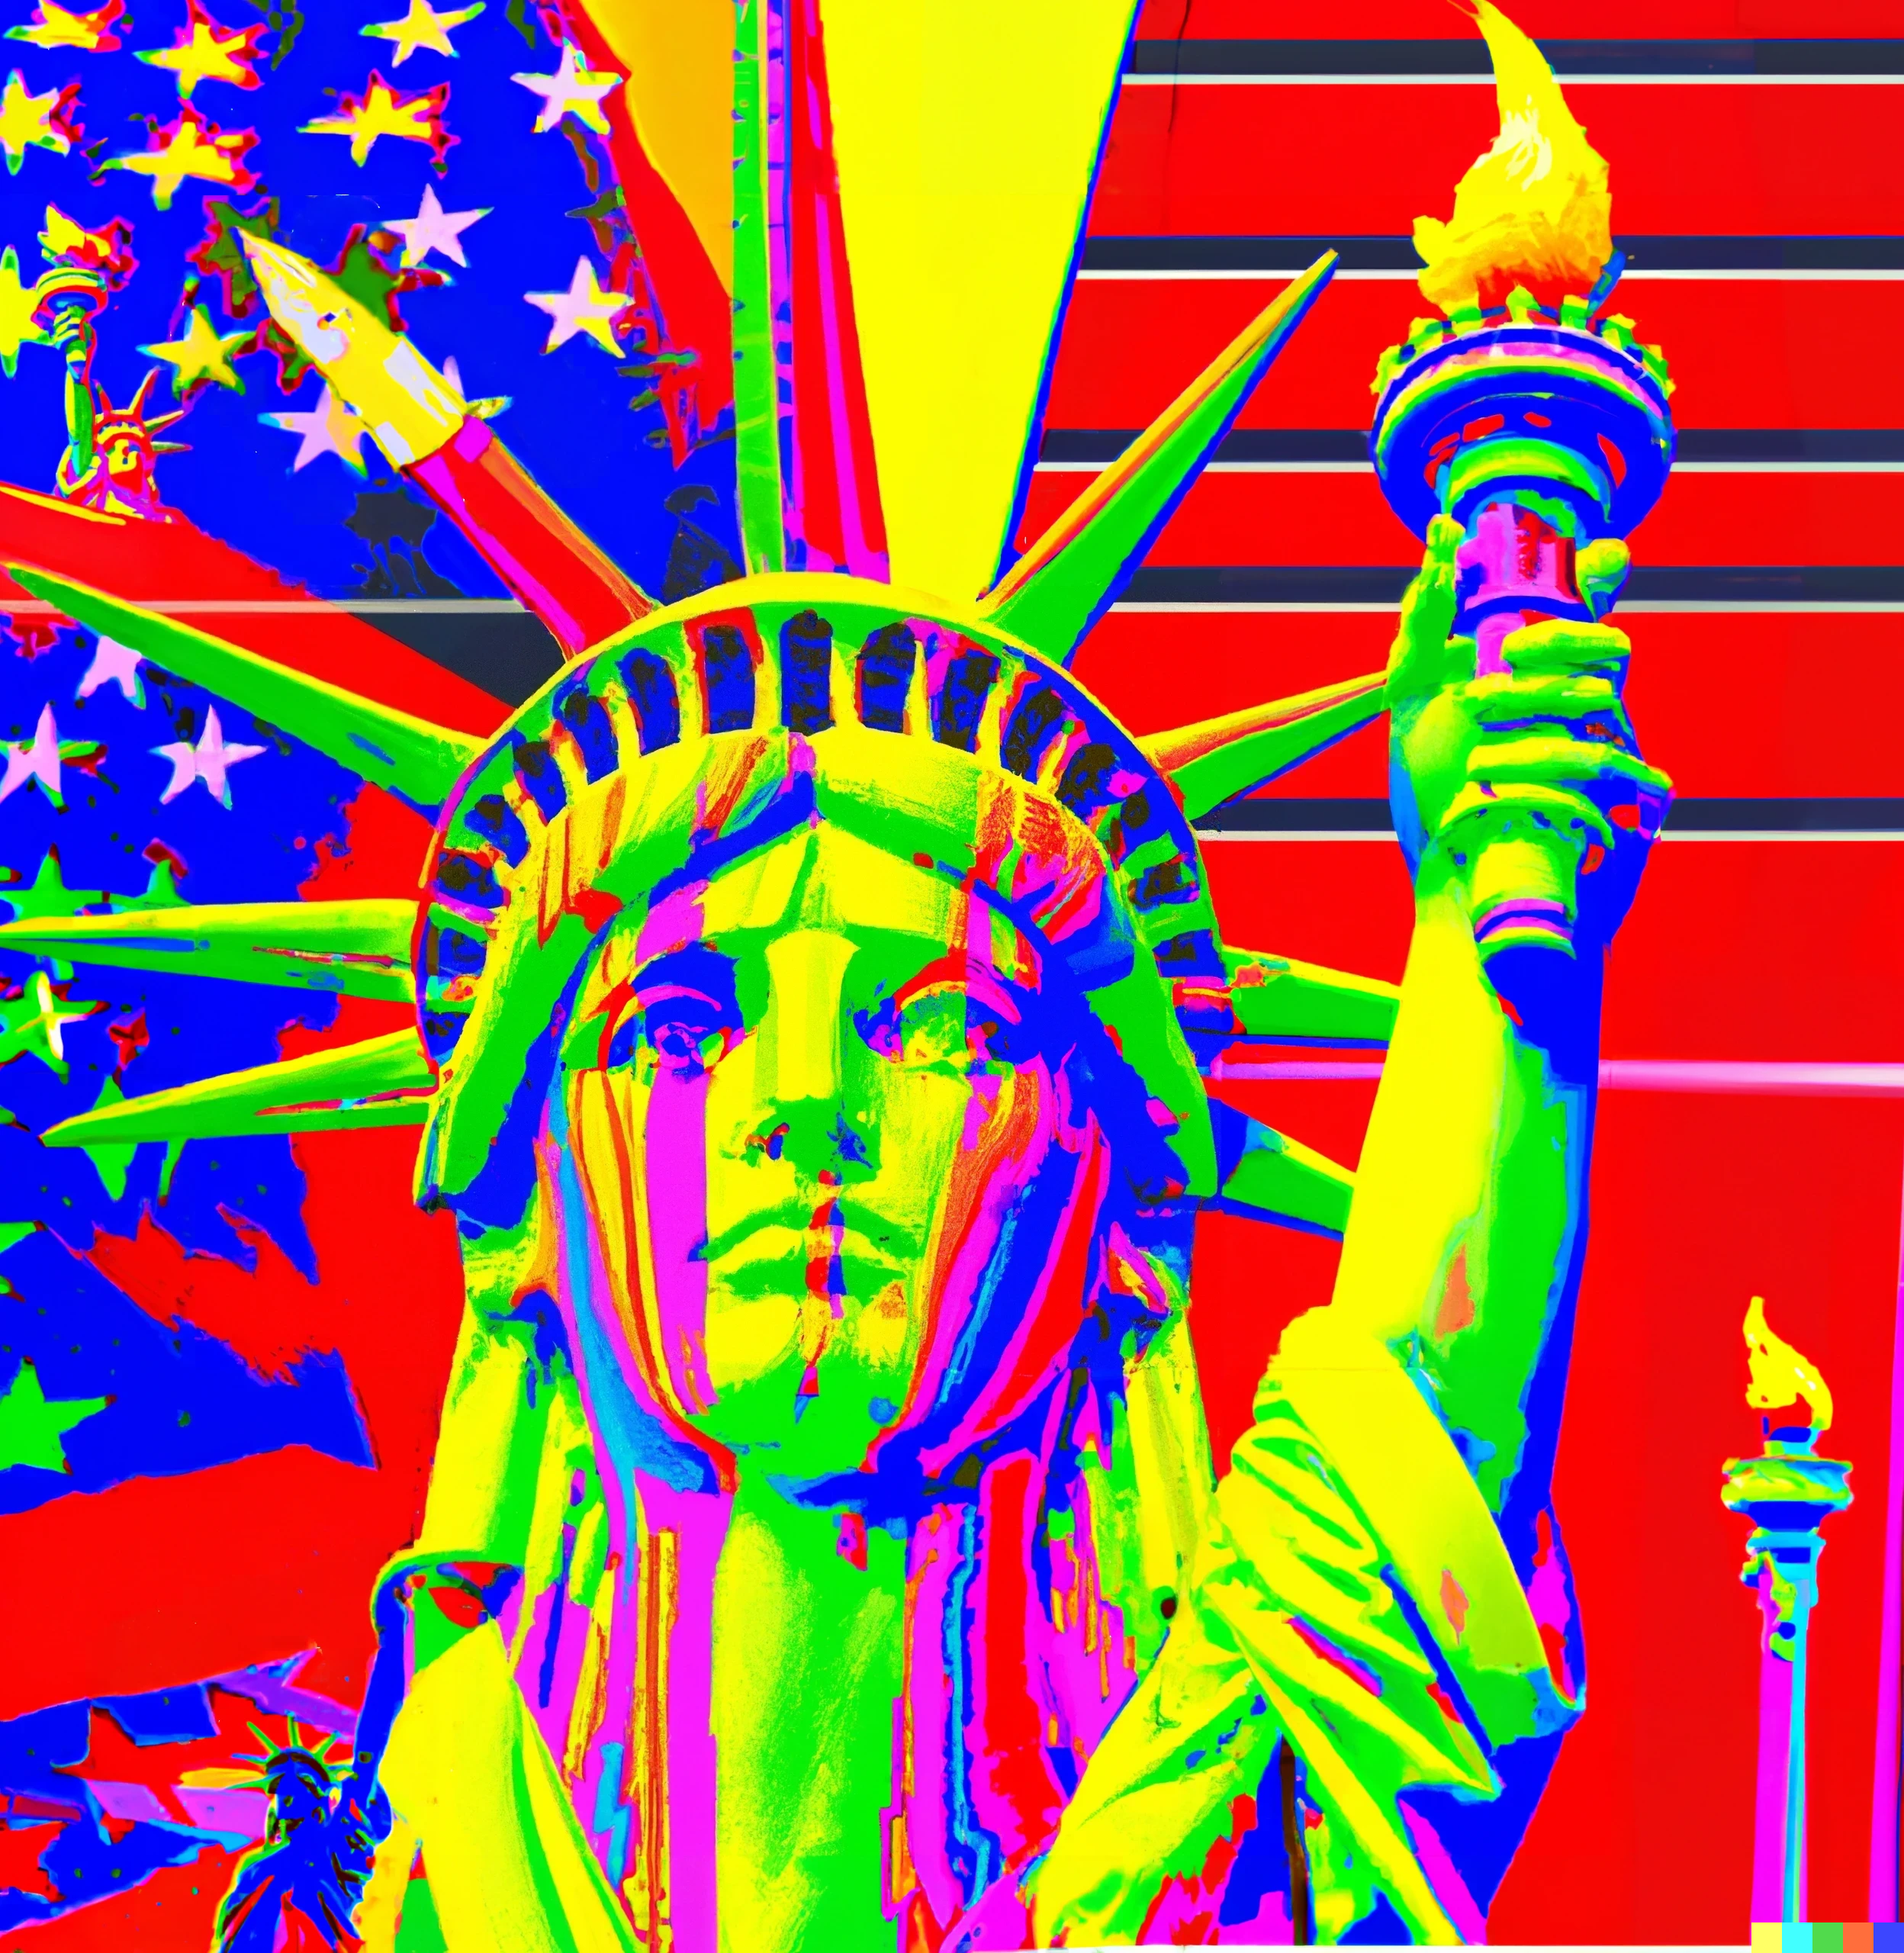 Statue of Liberty digital art by Tamassia Martins